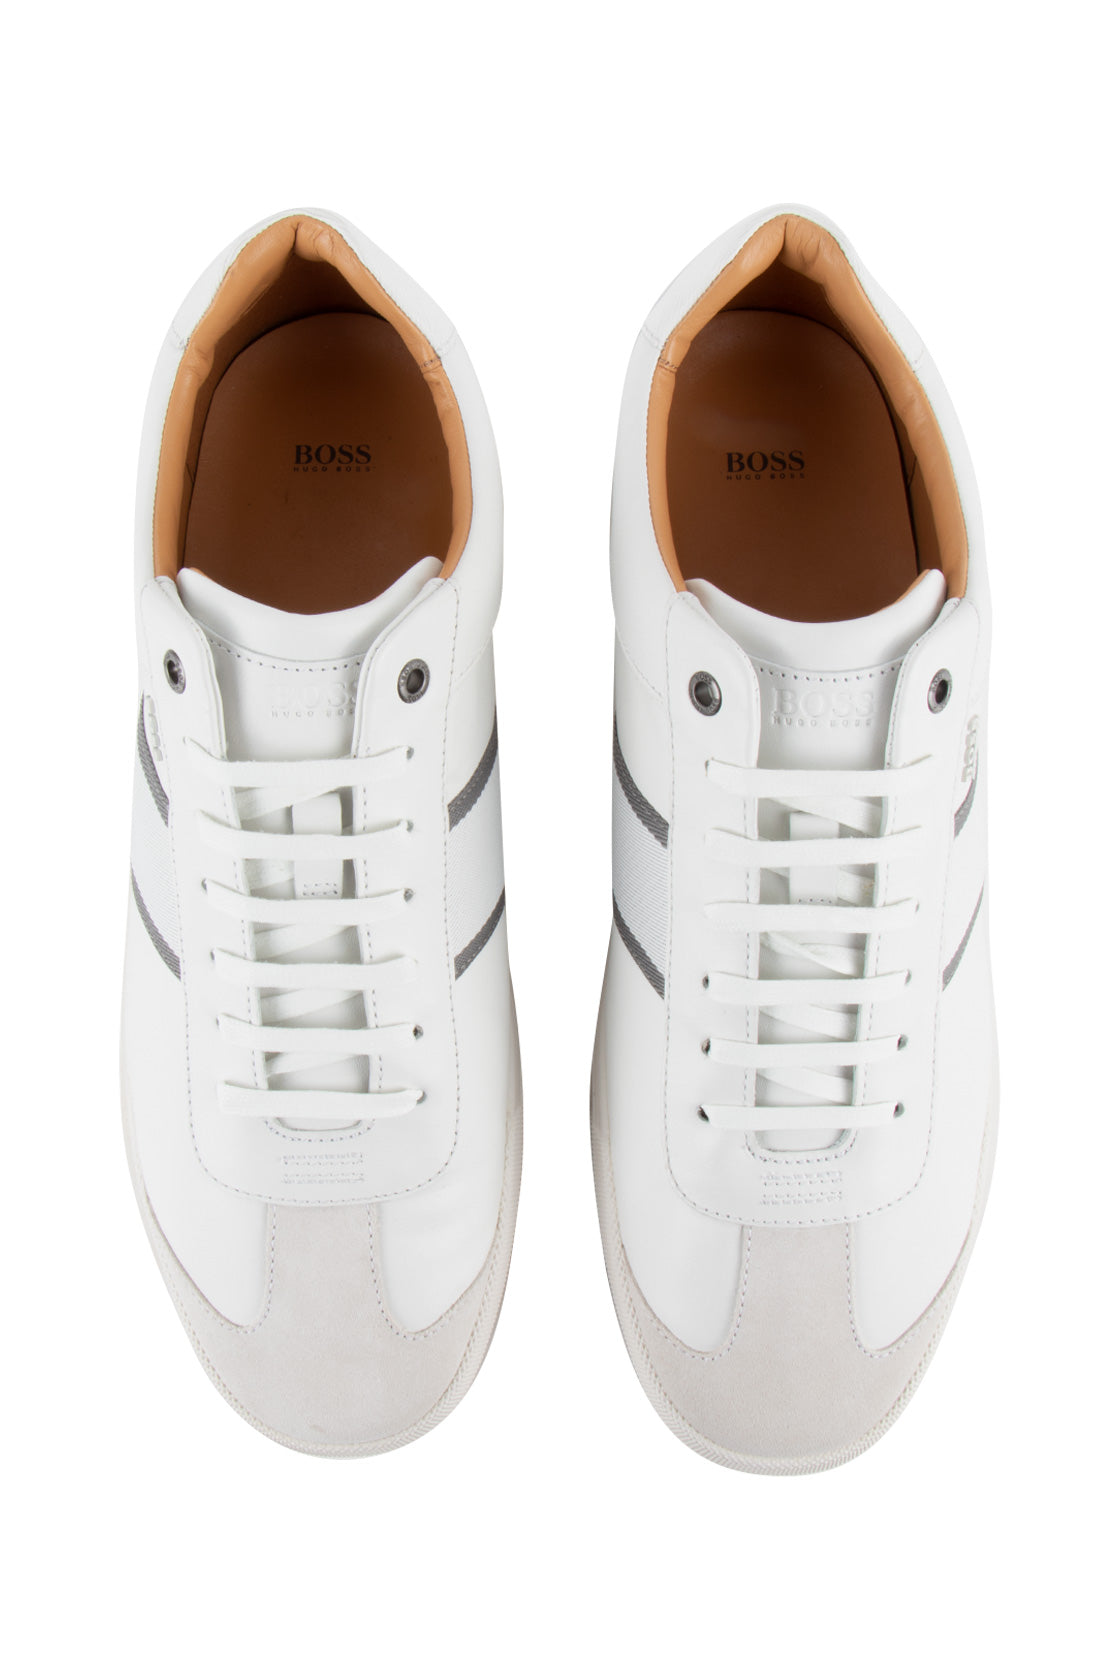 Hugo Boss Cosmo Tenn Shoe White